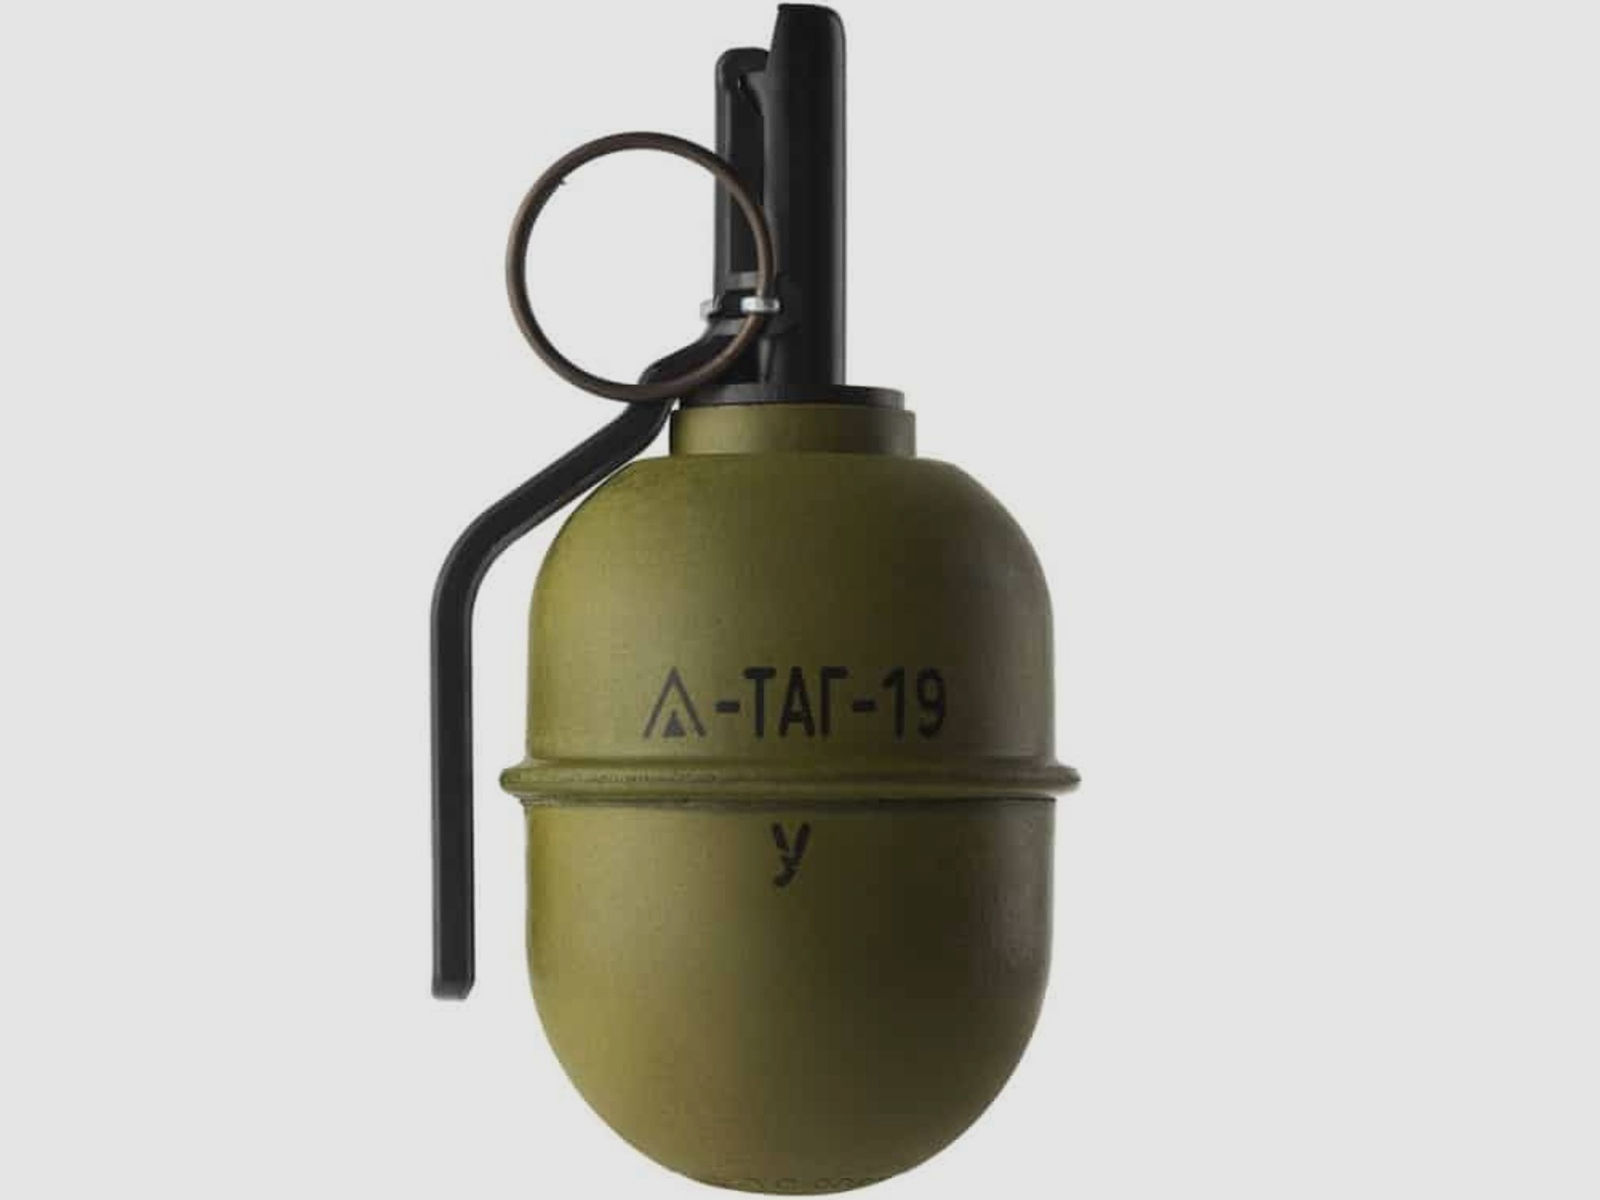 Taginn TAG-19Y Paintball / Airsoft Handgranate mit Kipphebel (Russia)